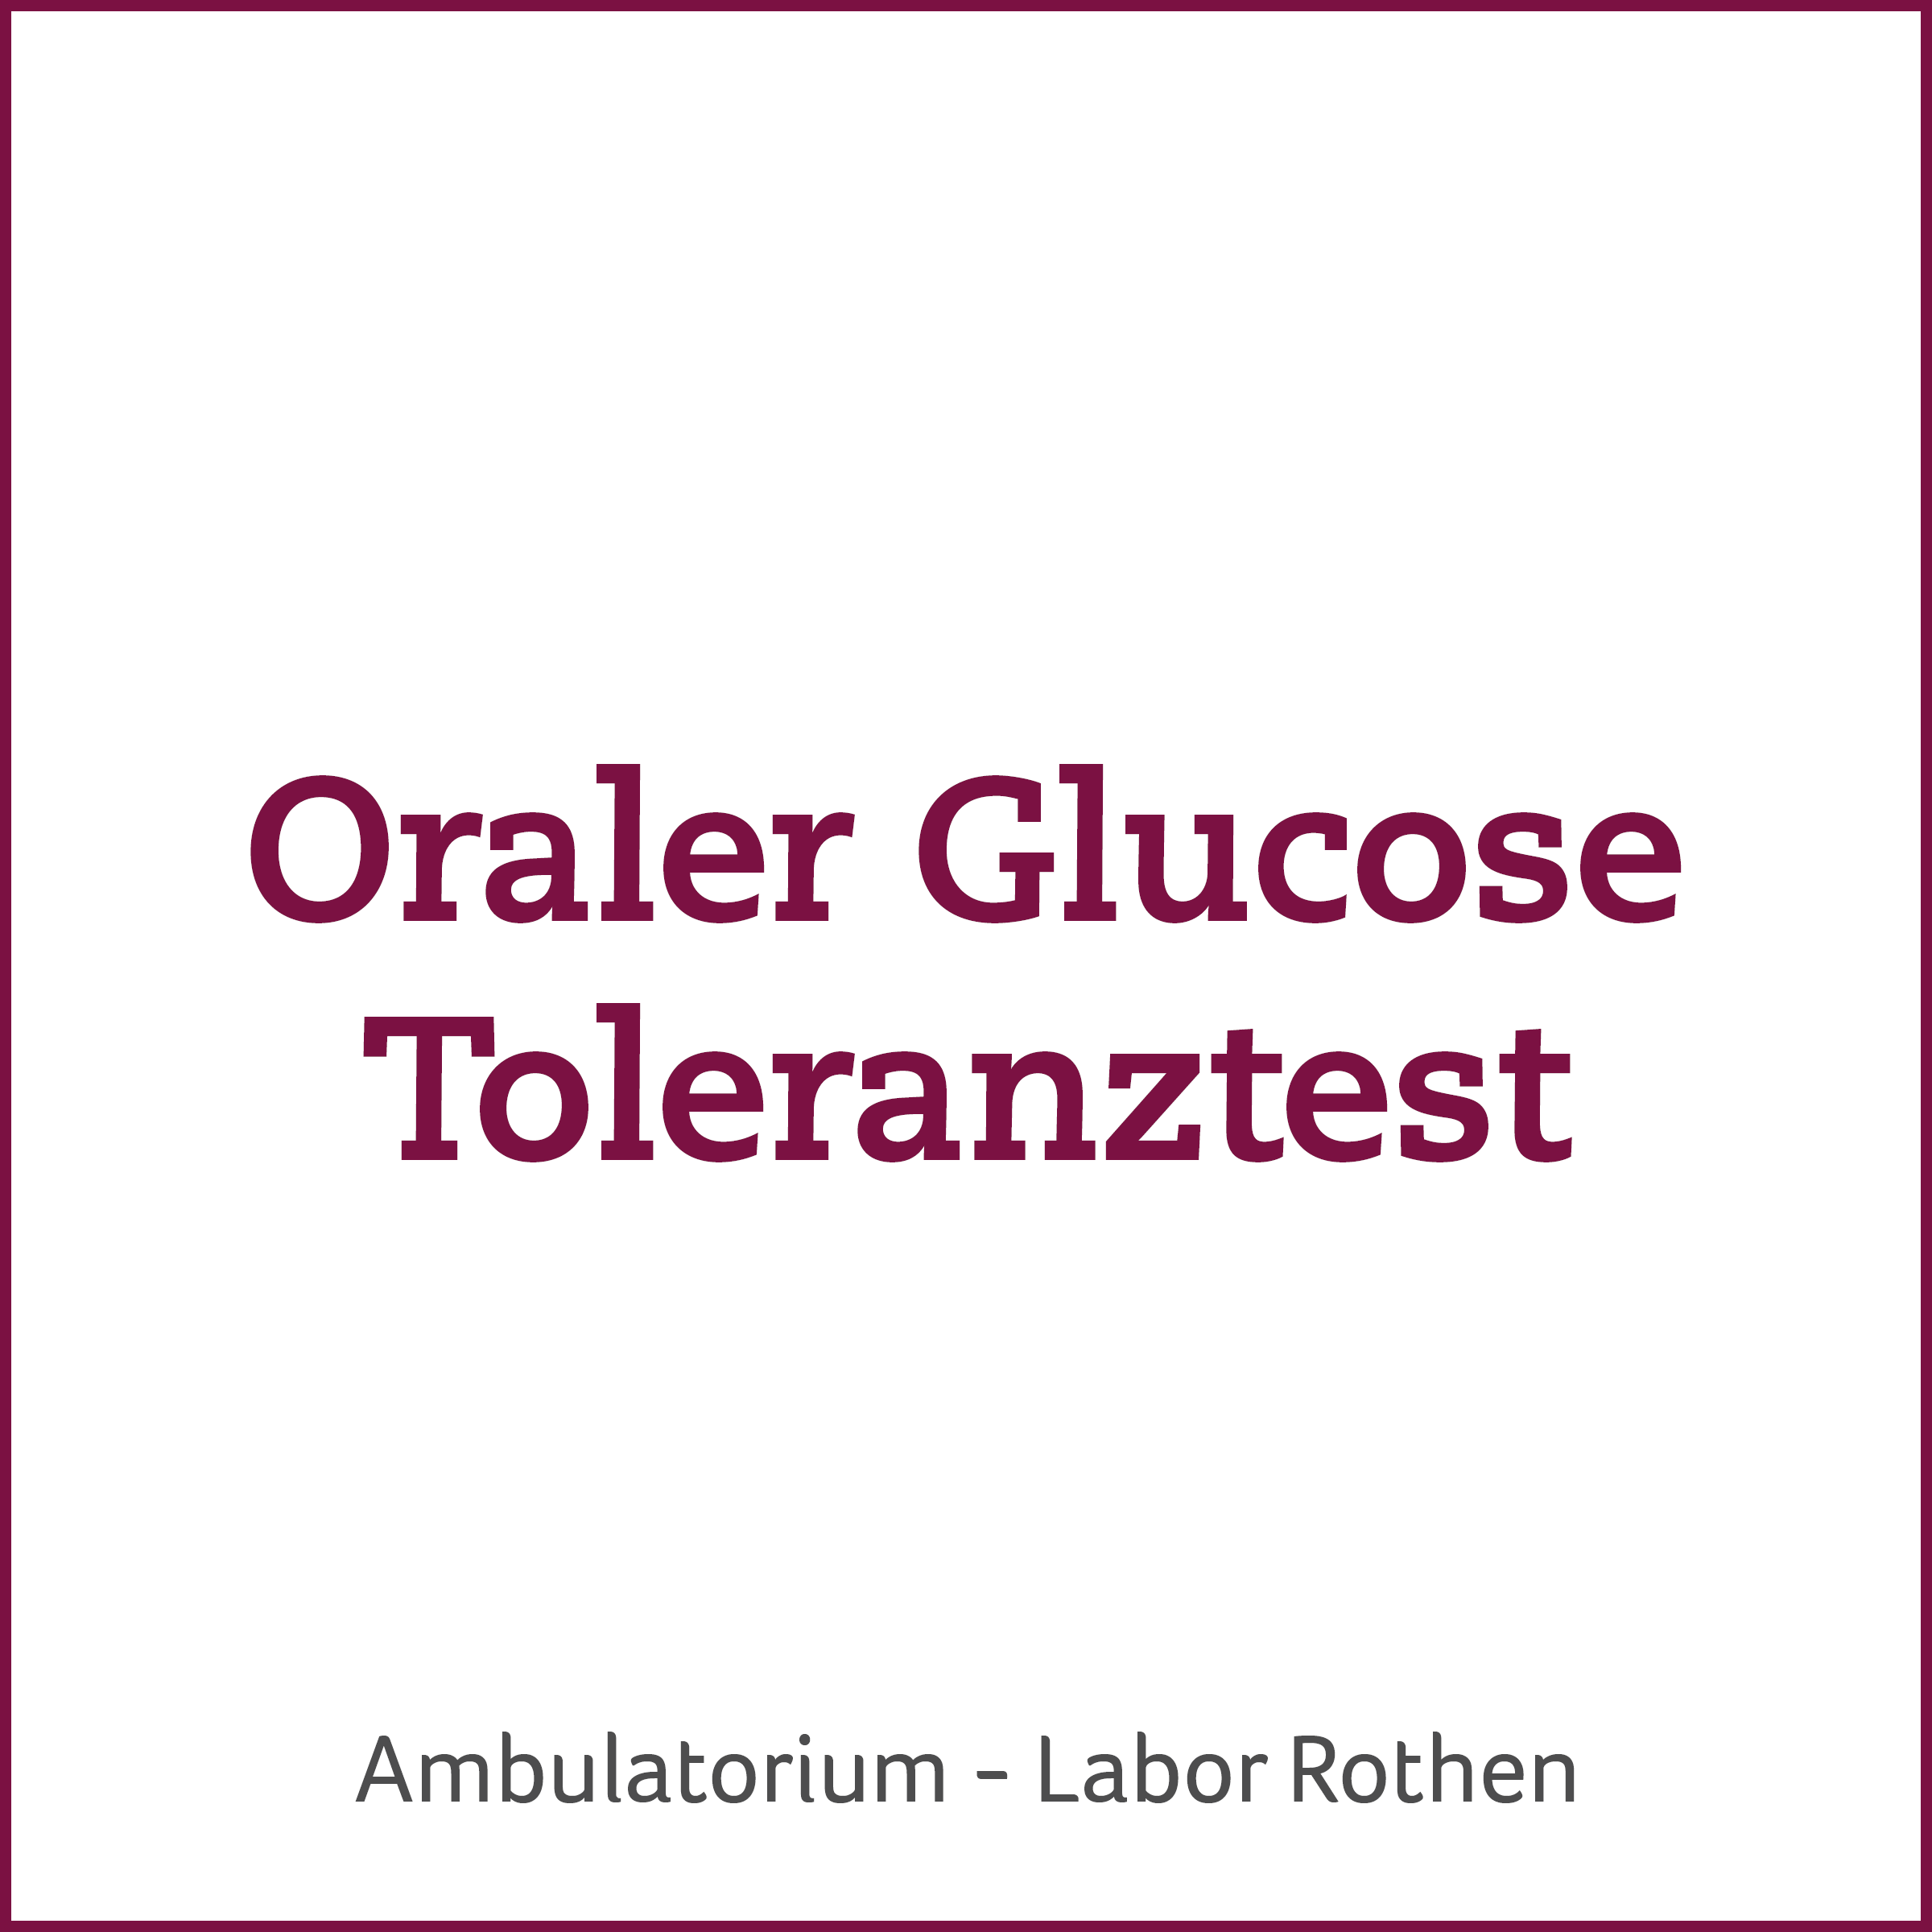 Oraler Glucose Toleranztest